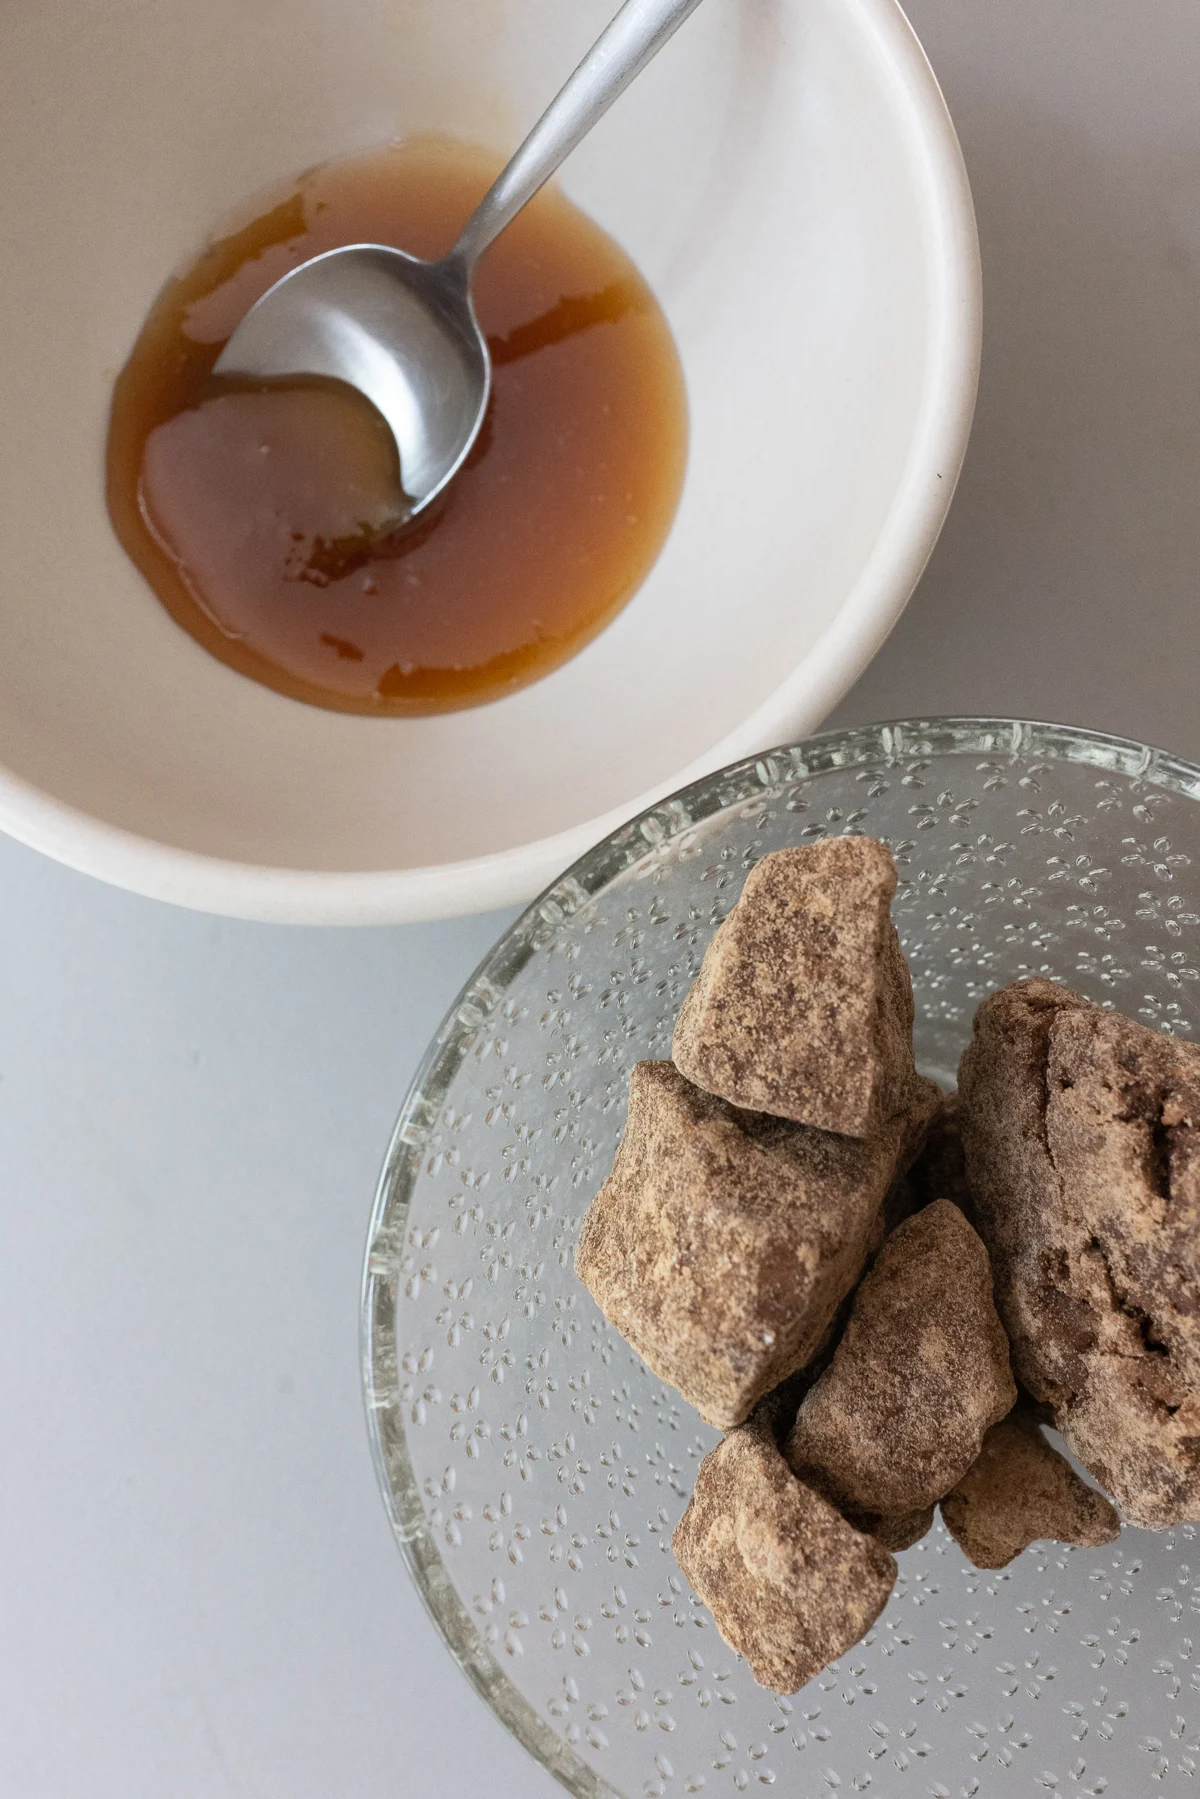 One bowl of honey and one bowl of kokuto (Japanese black sugar).